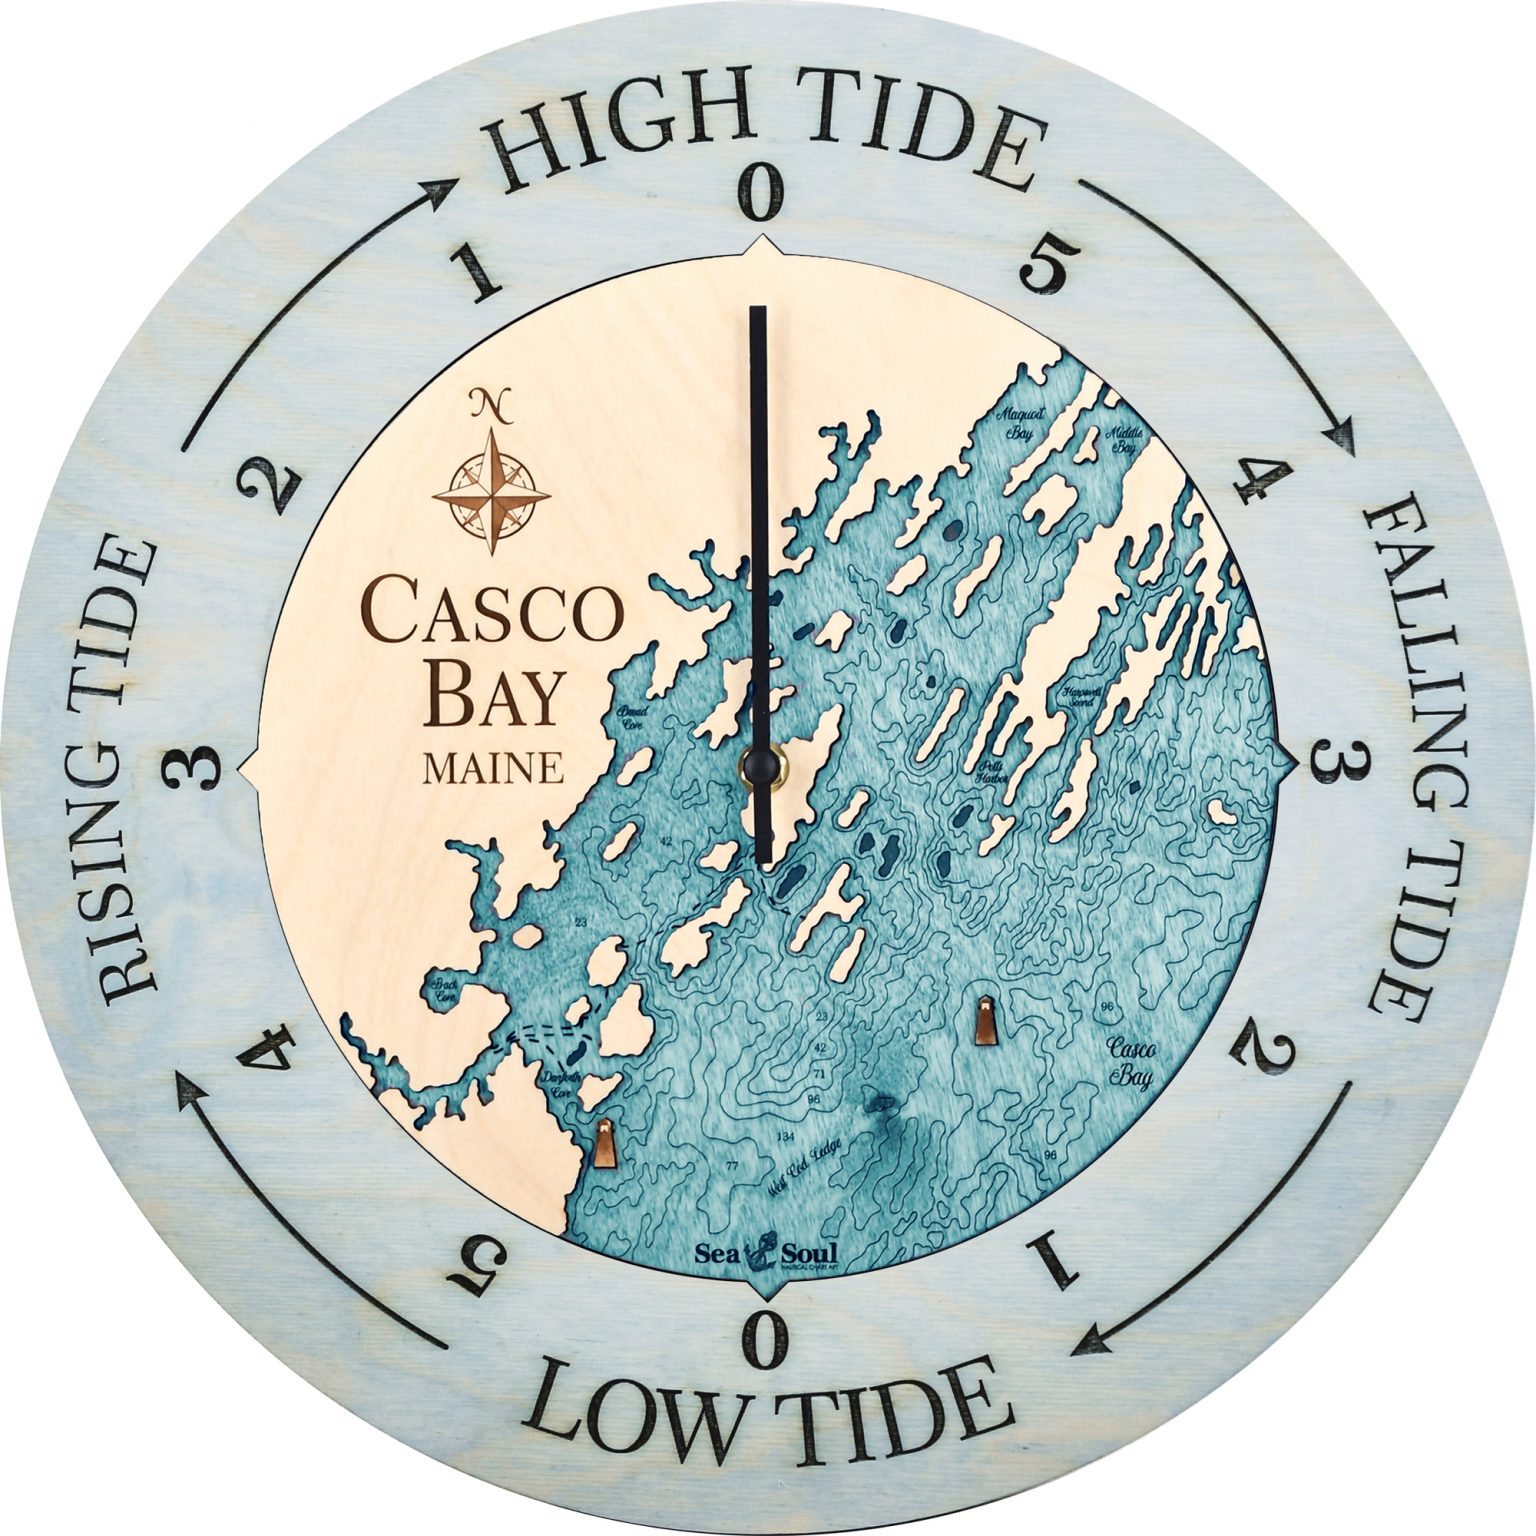 Casco Bay Tide Clock Sea and Soul Charts